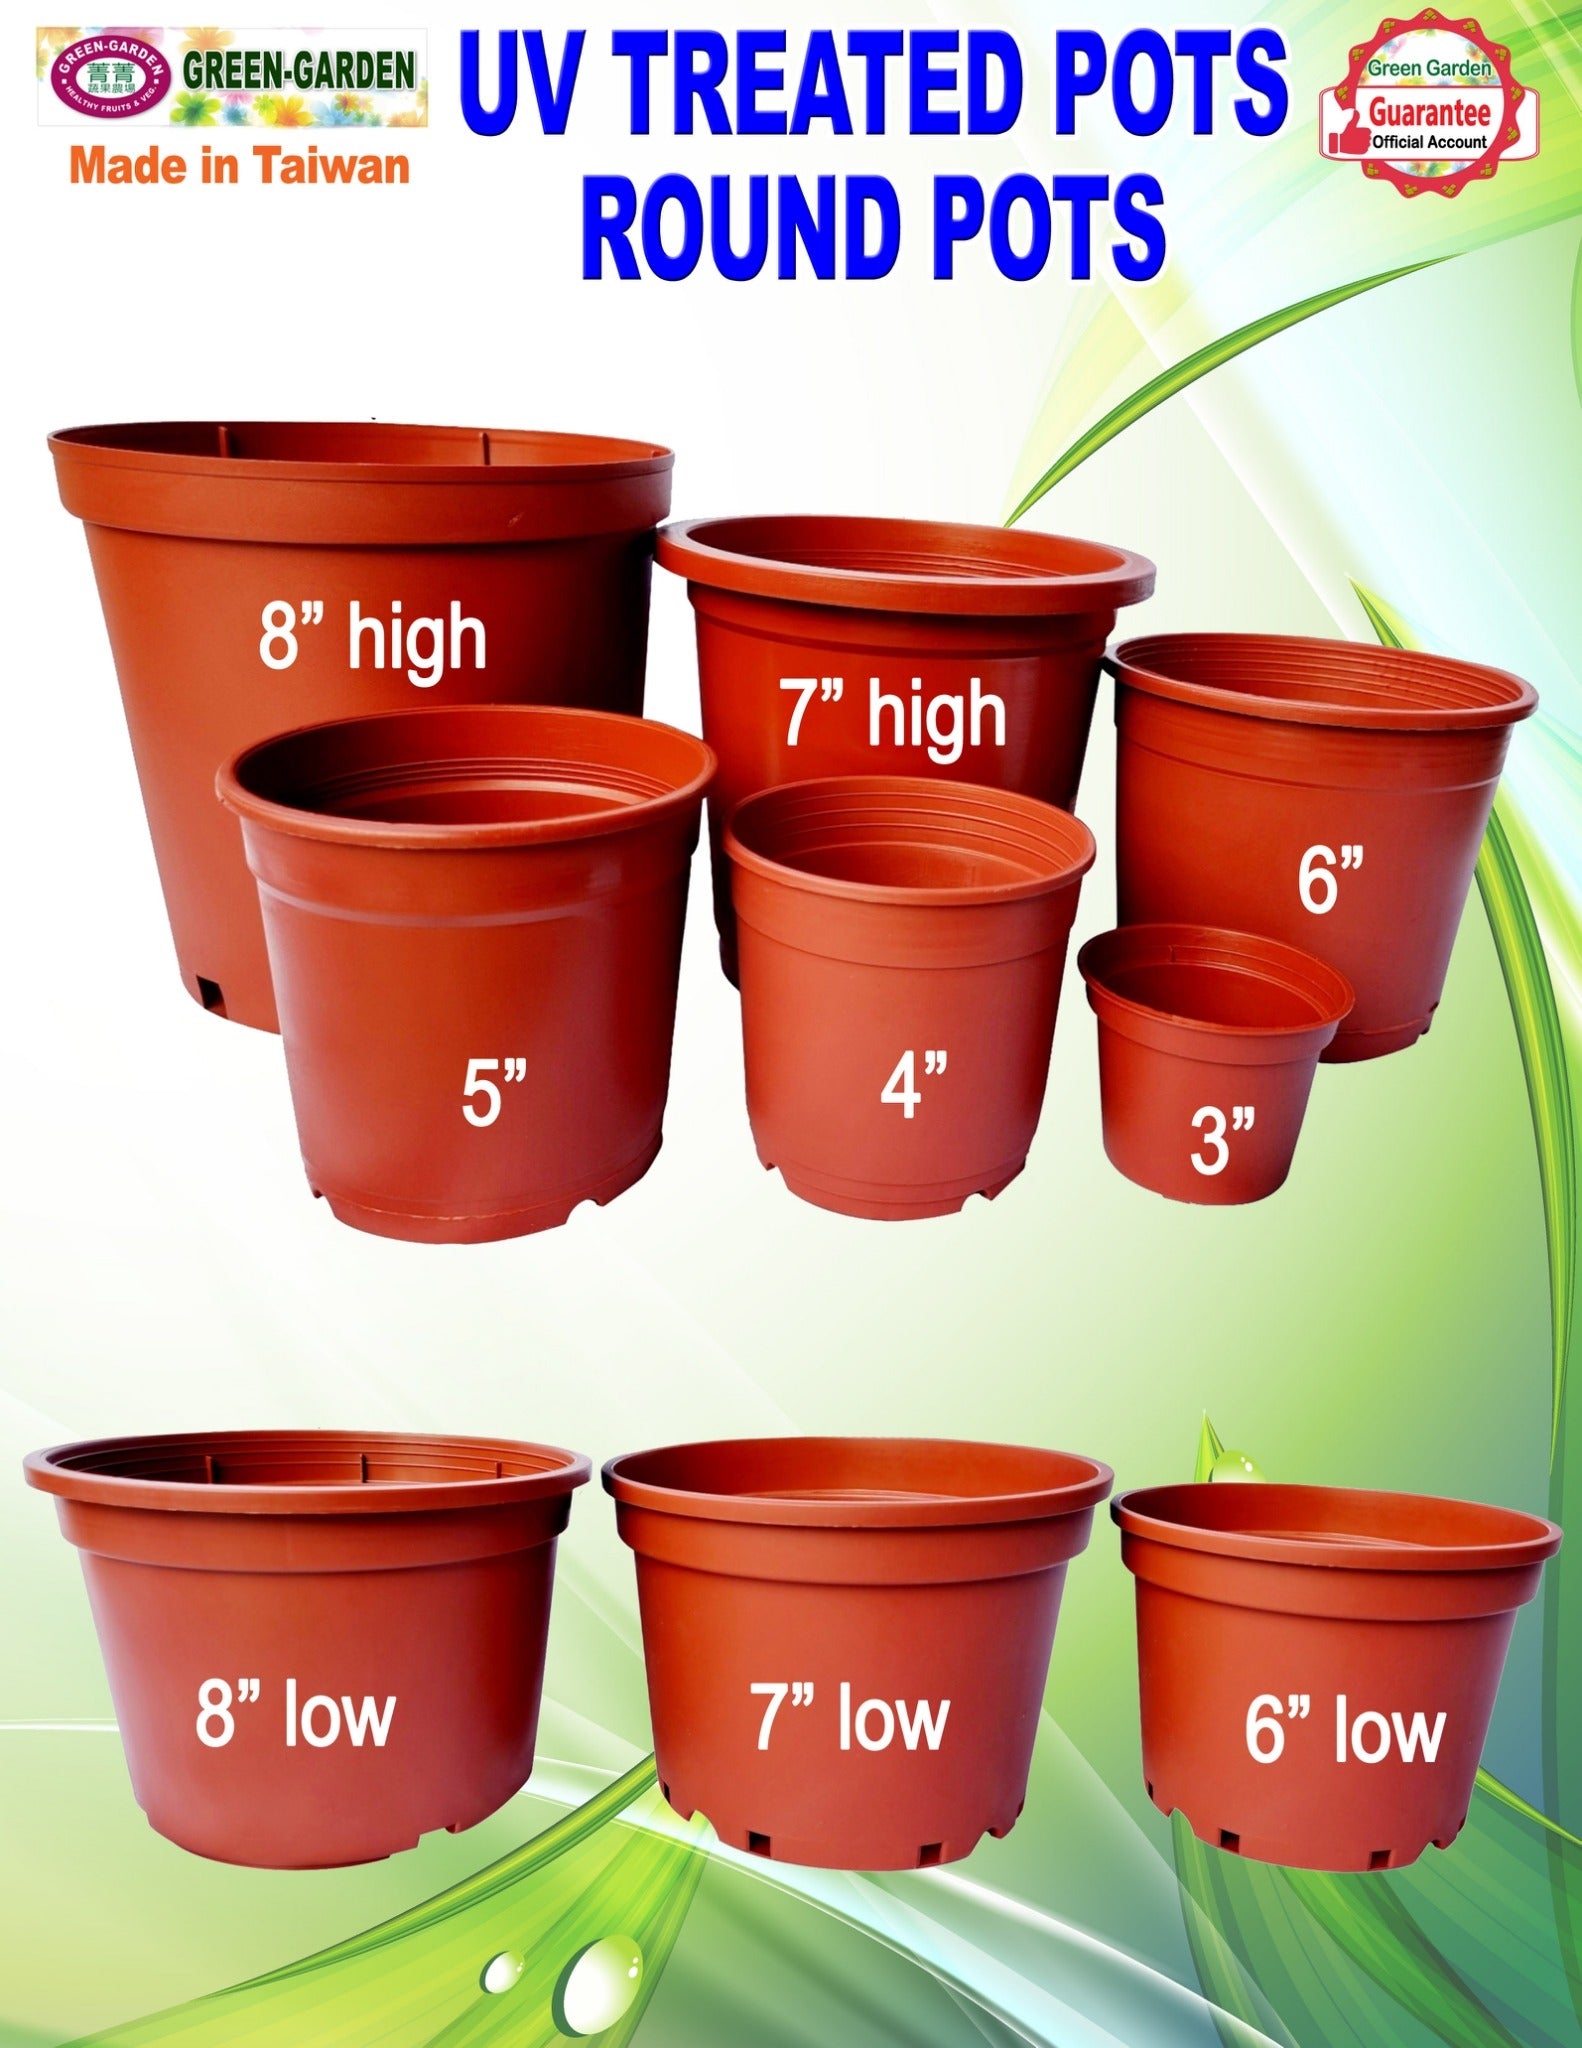 UV TREATED Round Pot 7" High Size: 18x20cm